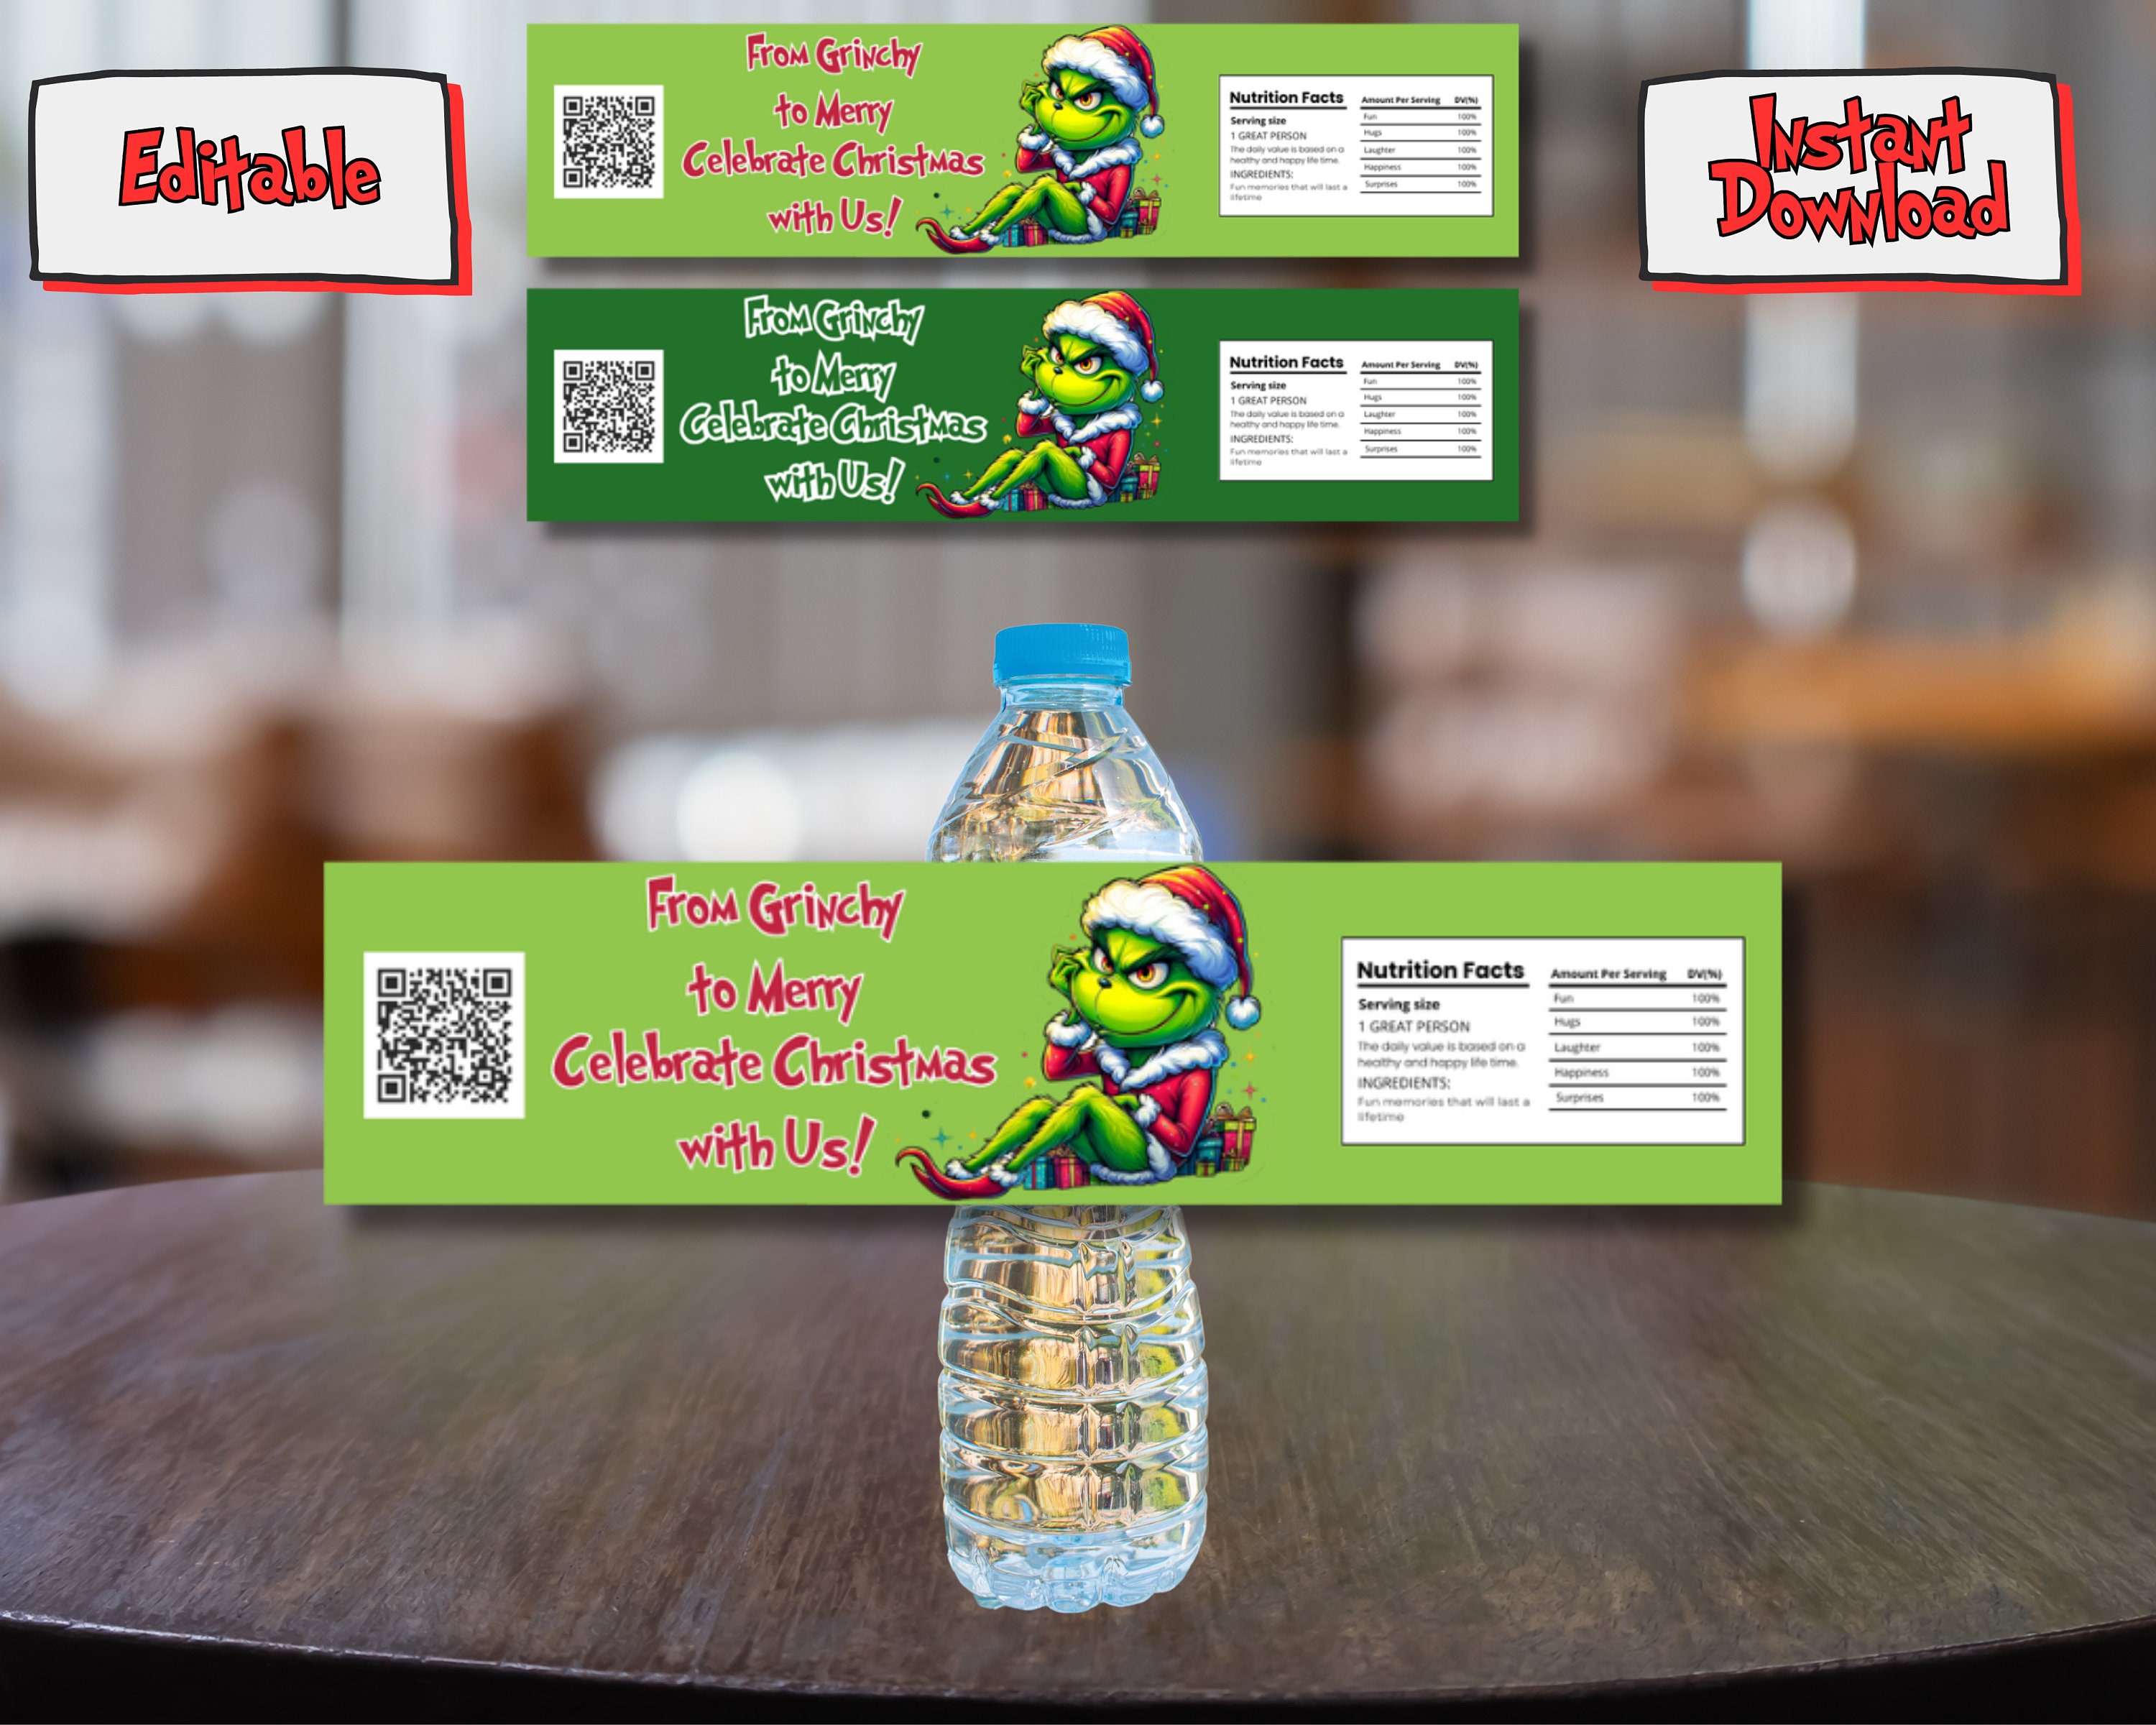 The Grinch Bottle Labels - oscarsitosroom, special offer 3.99$